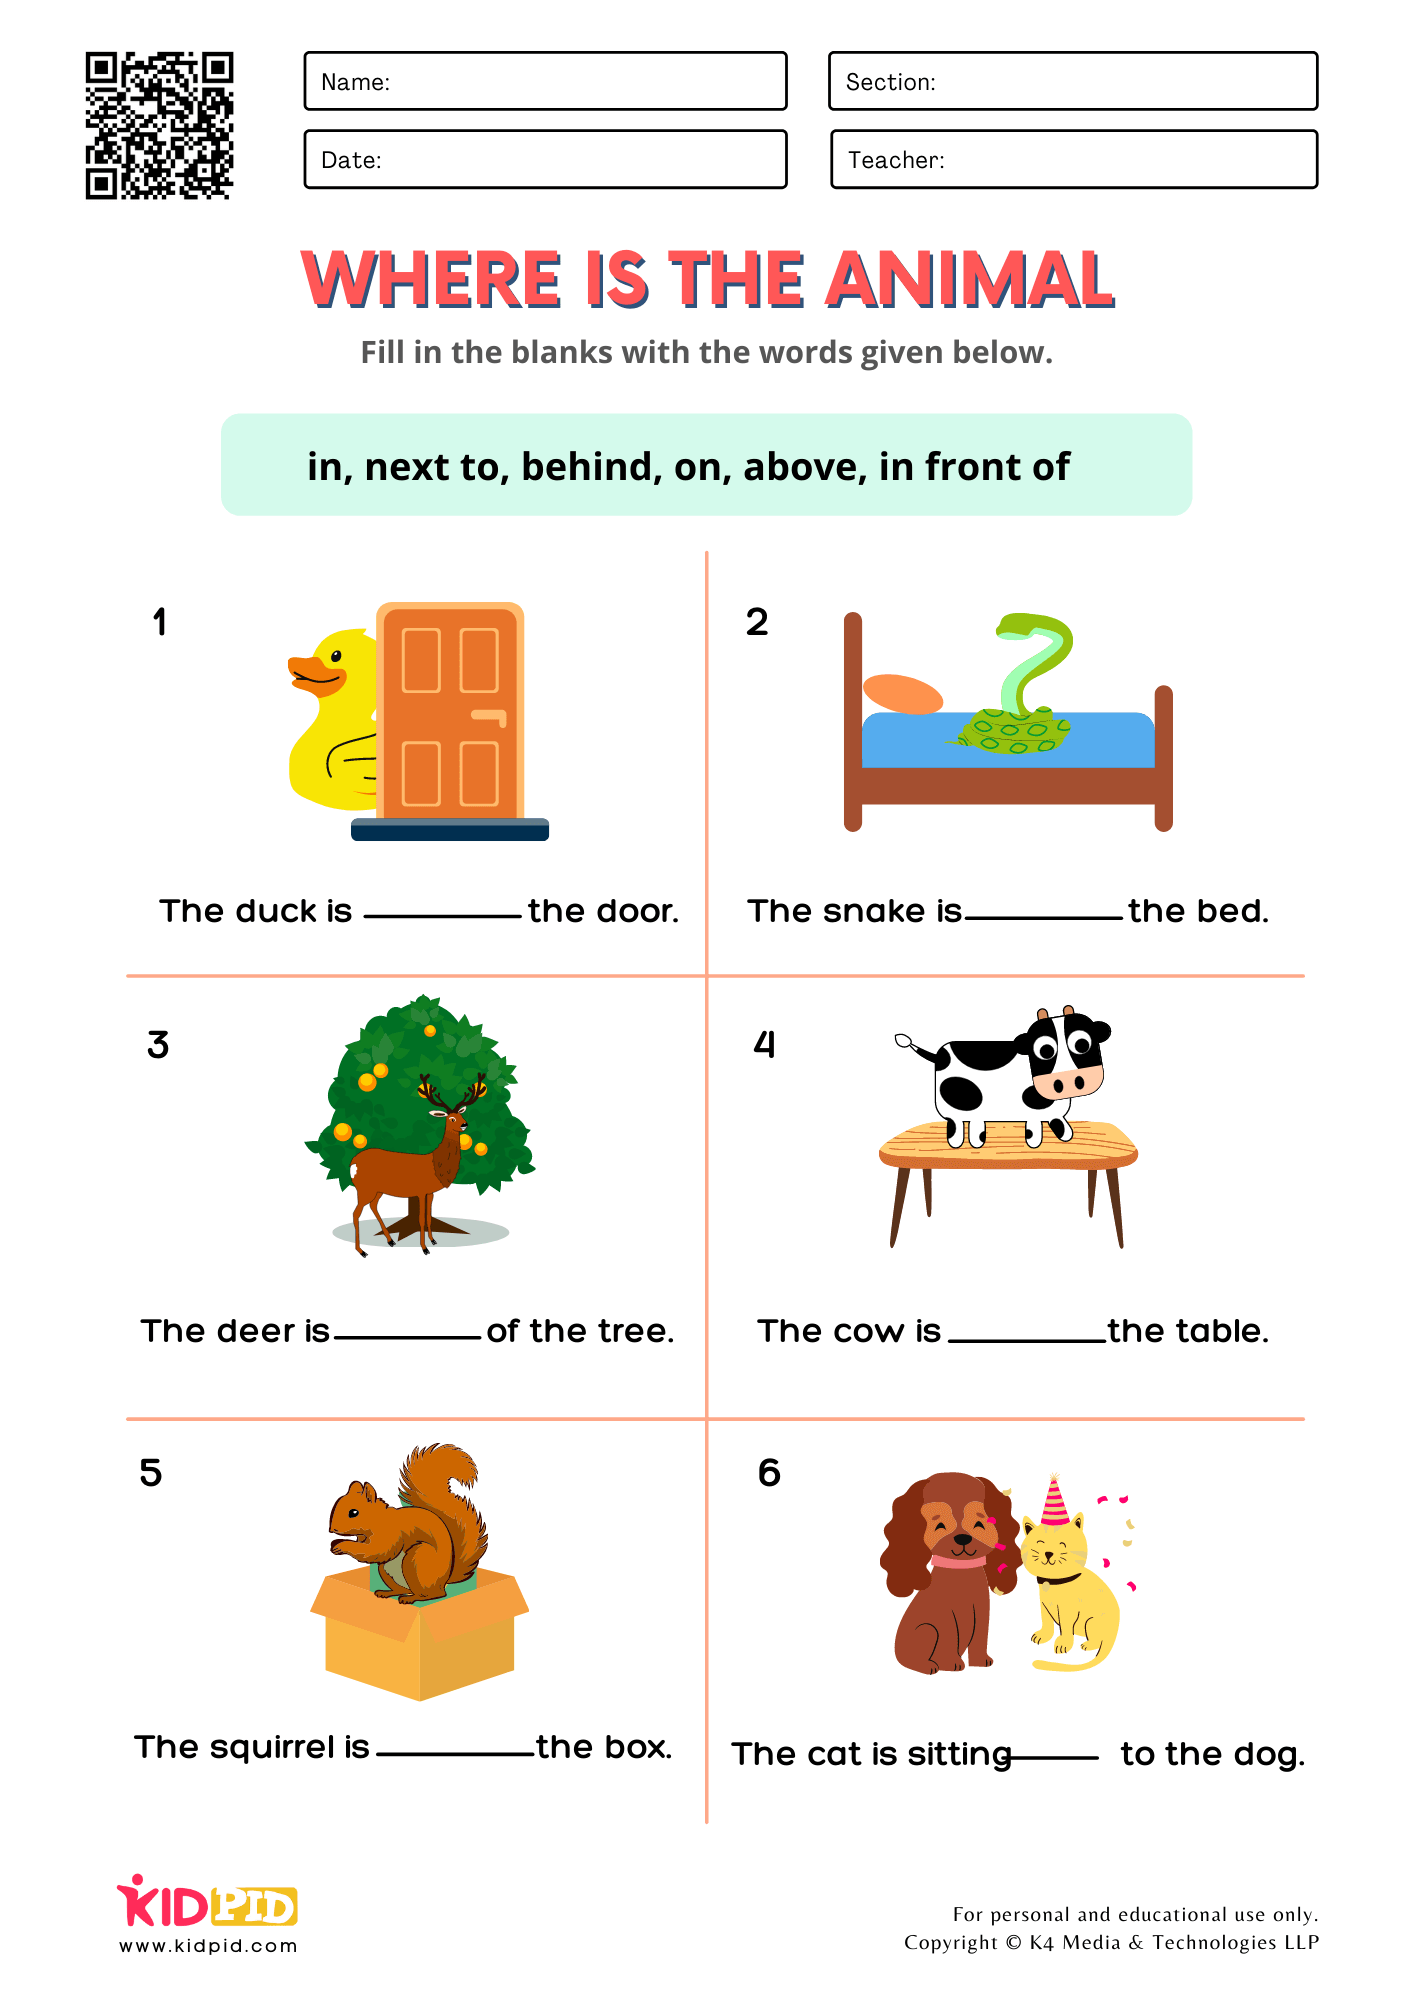 preposition-worksheets-for-kindergarten-kidpid